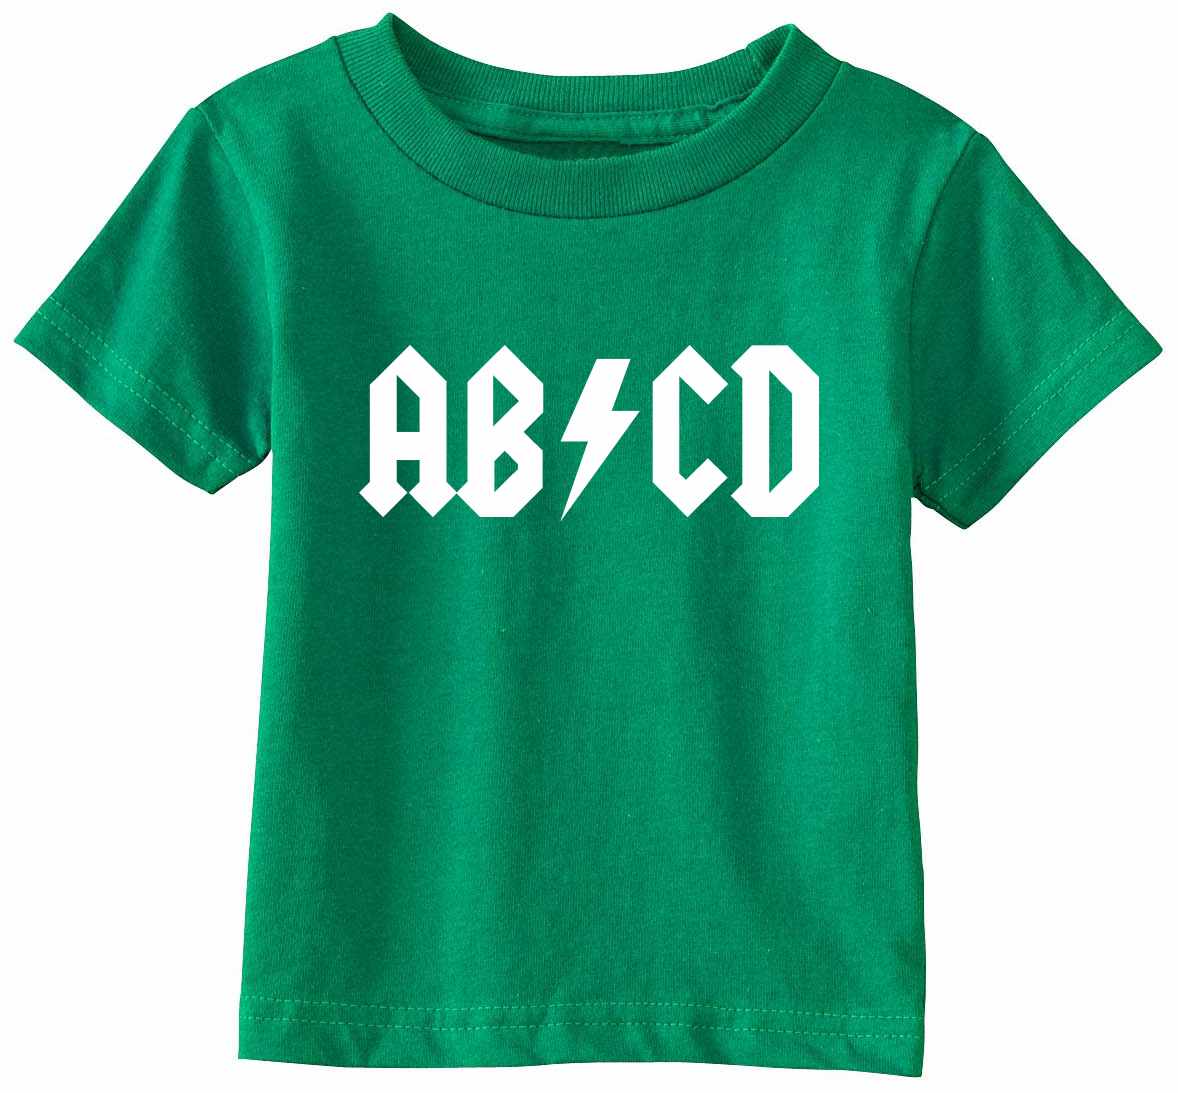 ABCD Infant/Toddler 